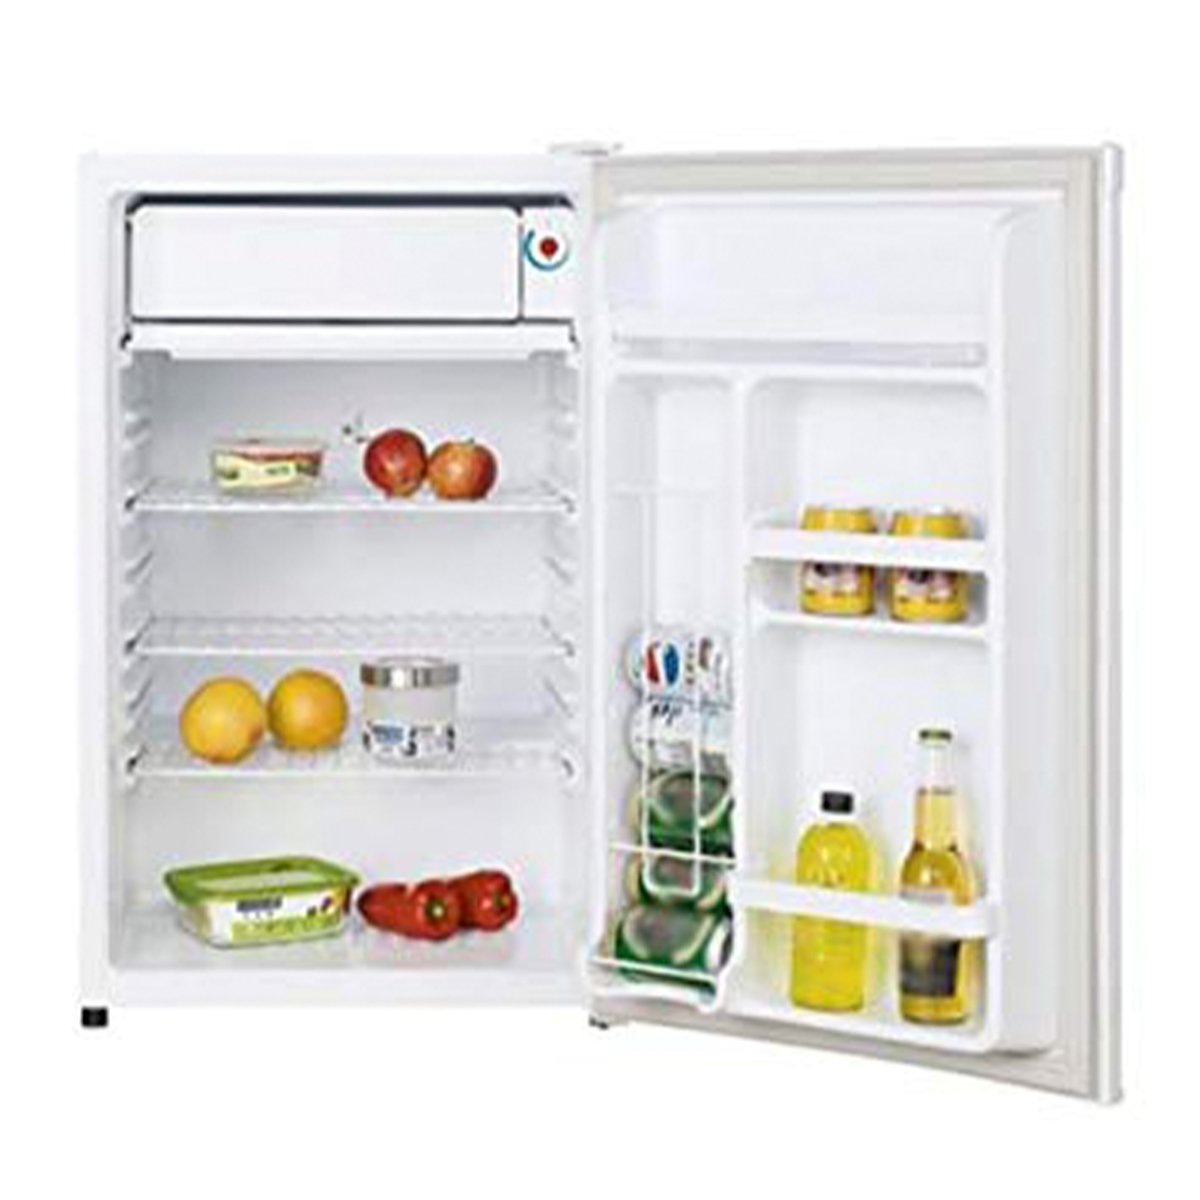 Sharp Mini Bar Series Single Door Refrigerator SJ-K155X-SL3 150LTR